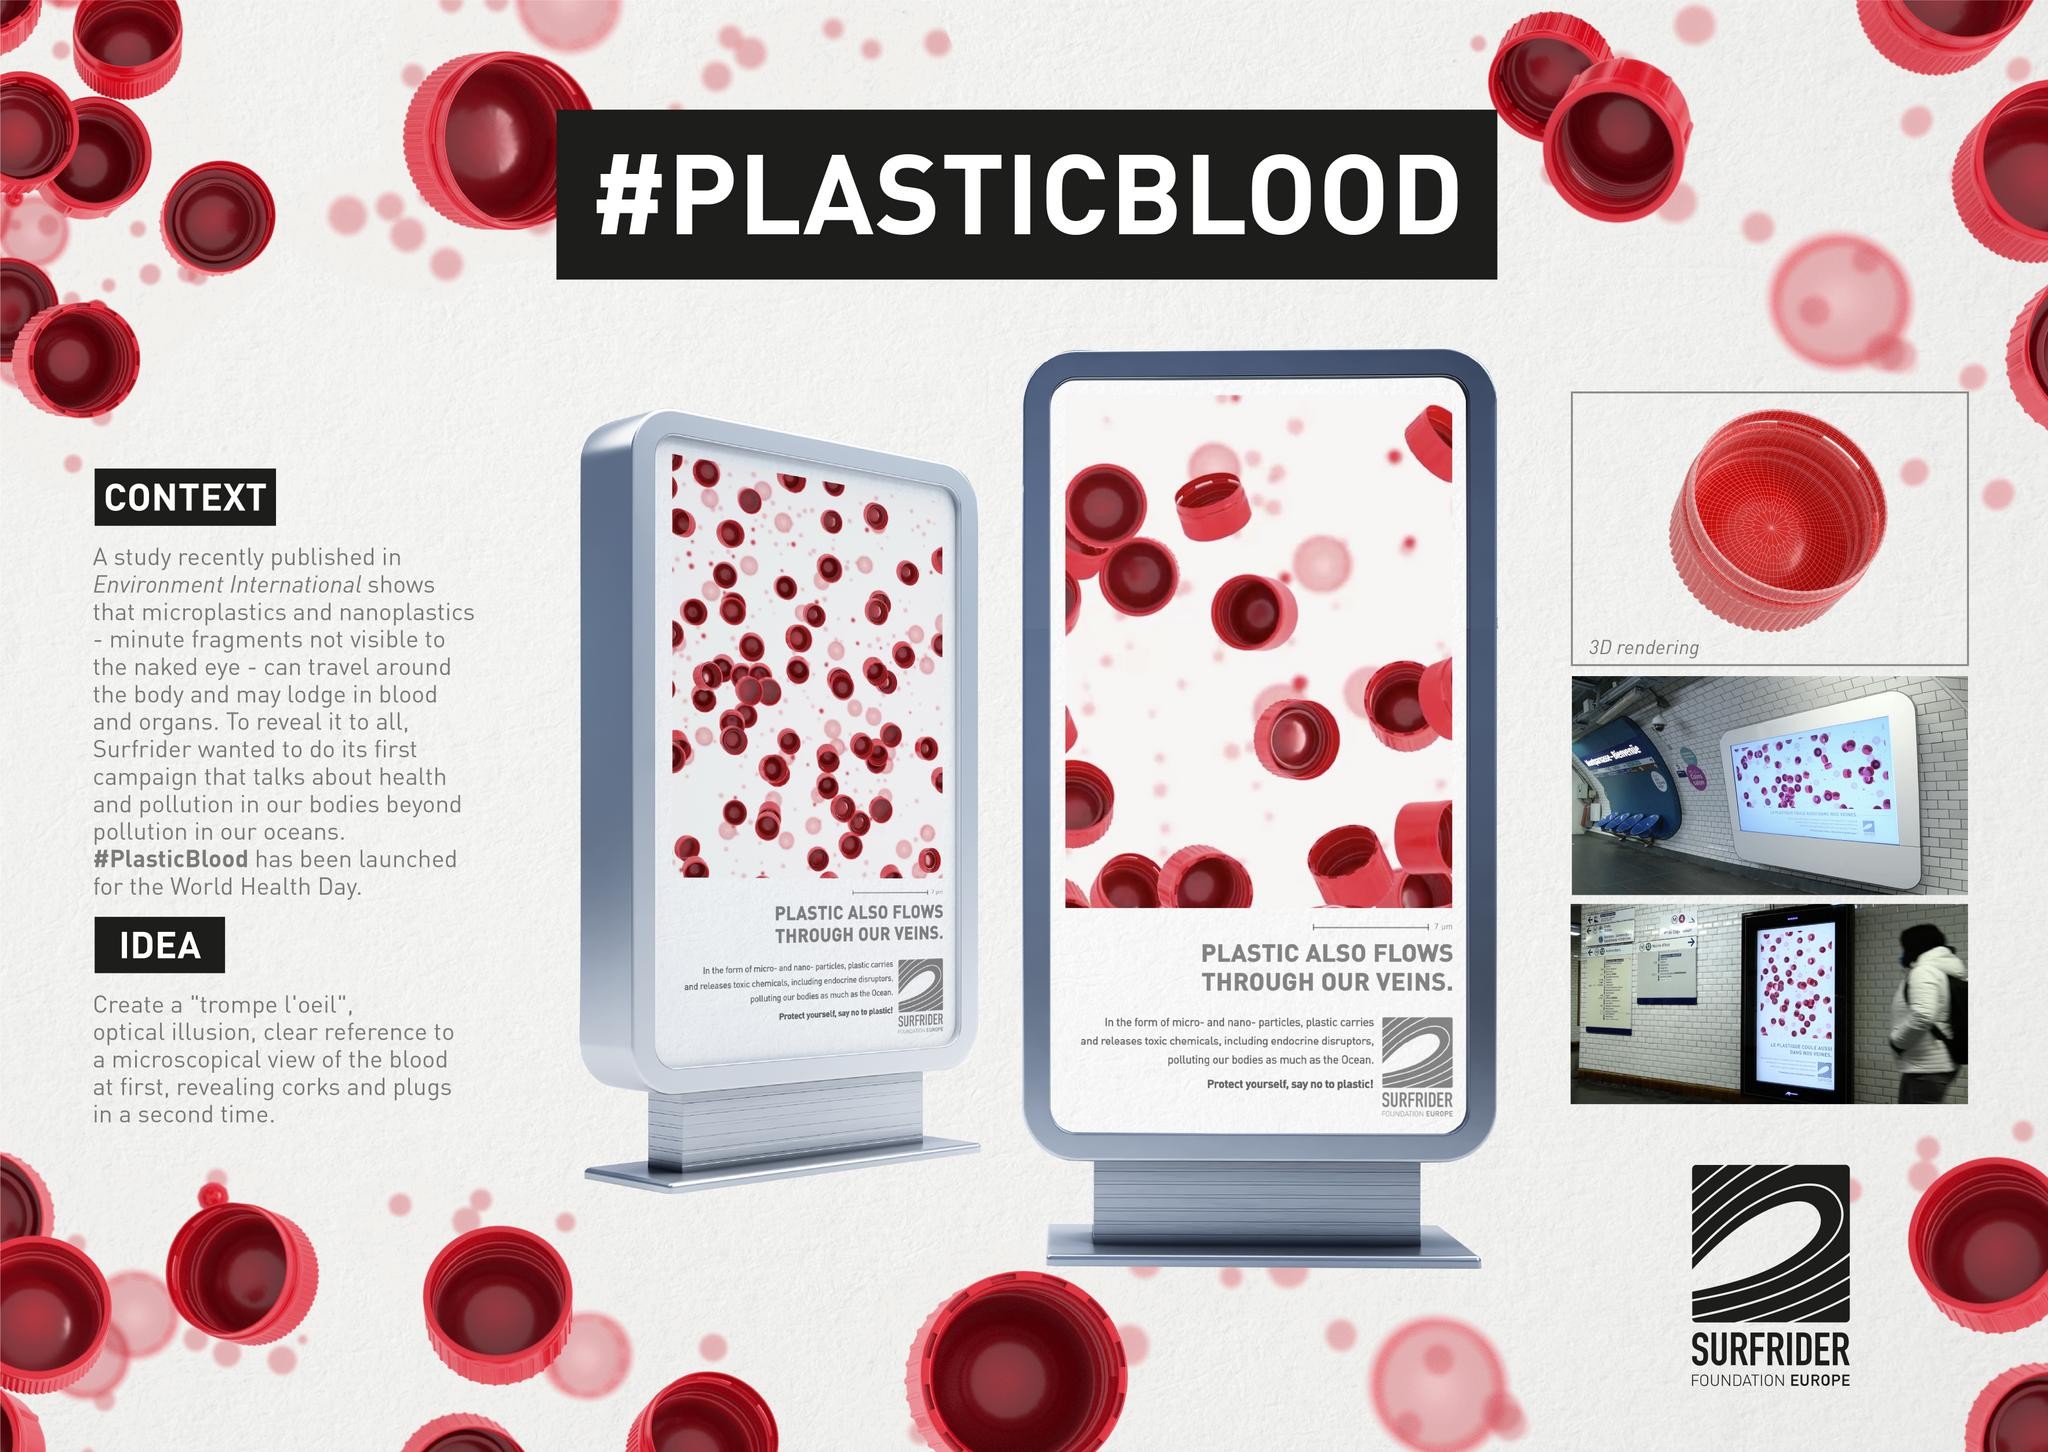 Plastic blood